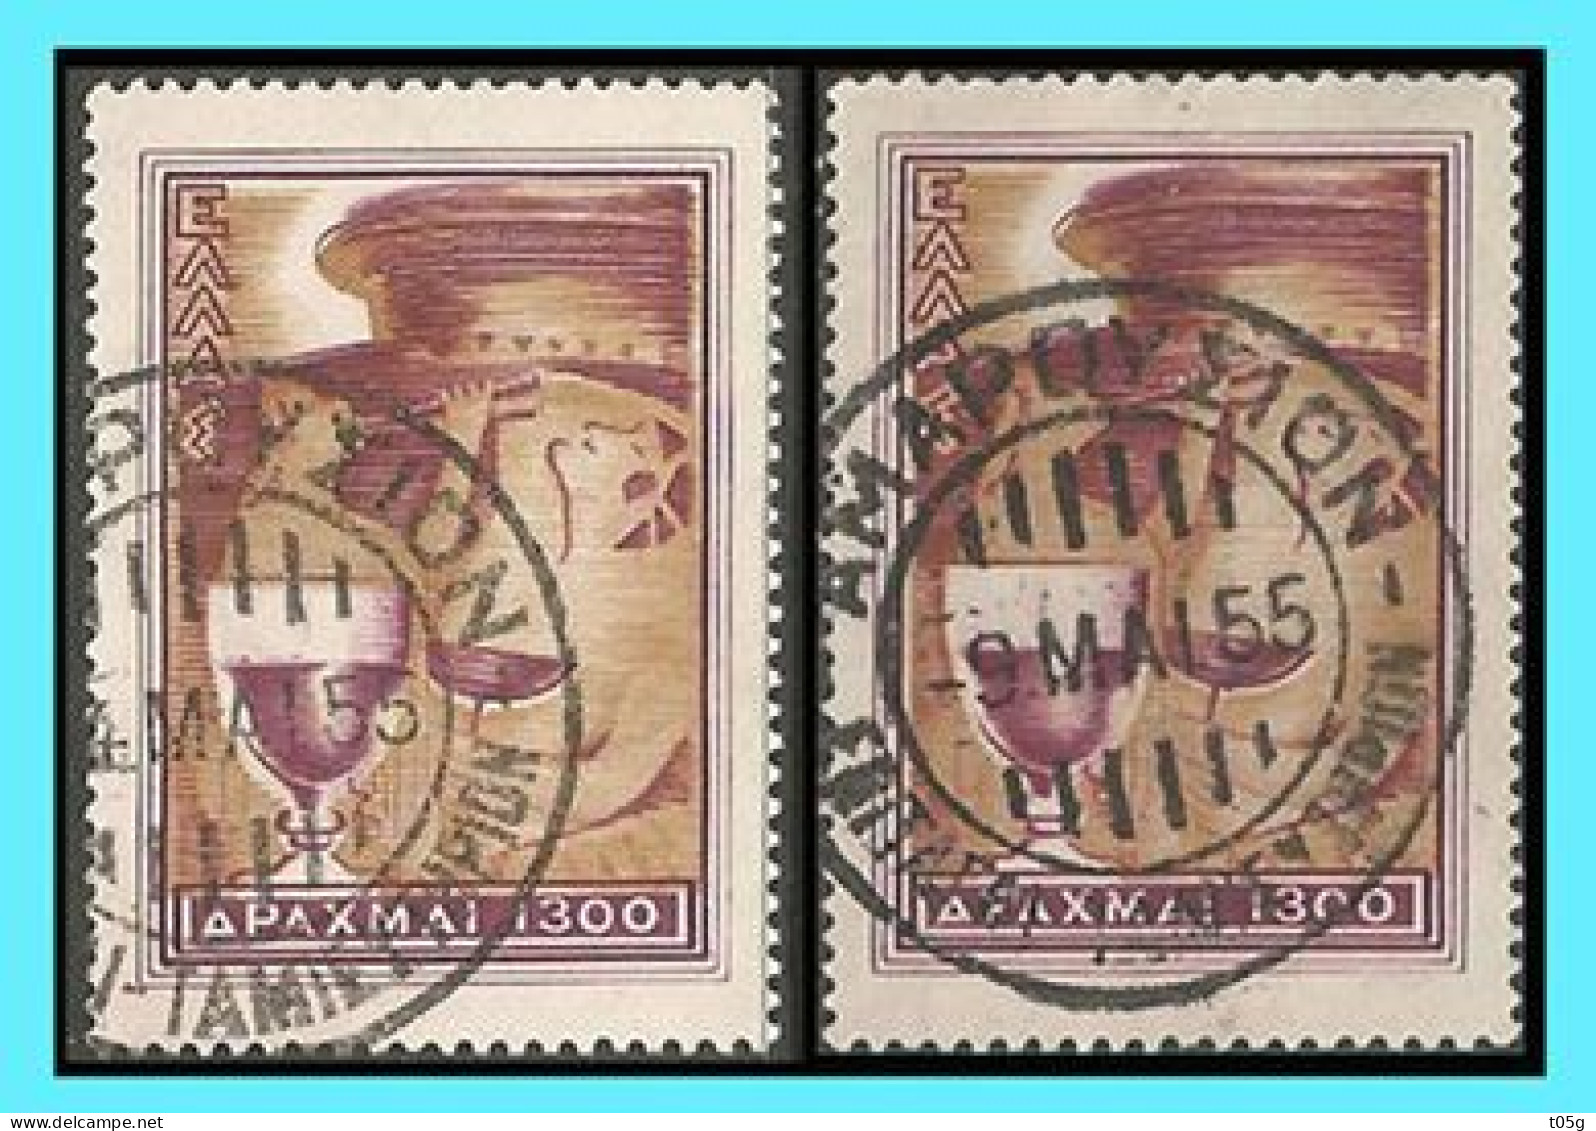 GREECE- GRECE - HELLAS 1953 : Cancellation  (AMAROUSION 4 MAI 55 SAVINGS BANK) - Poststempel - Freistempel